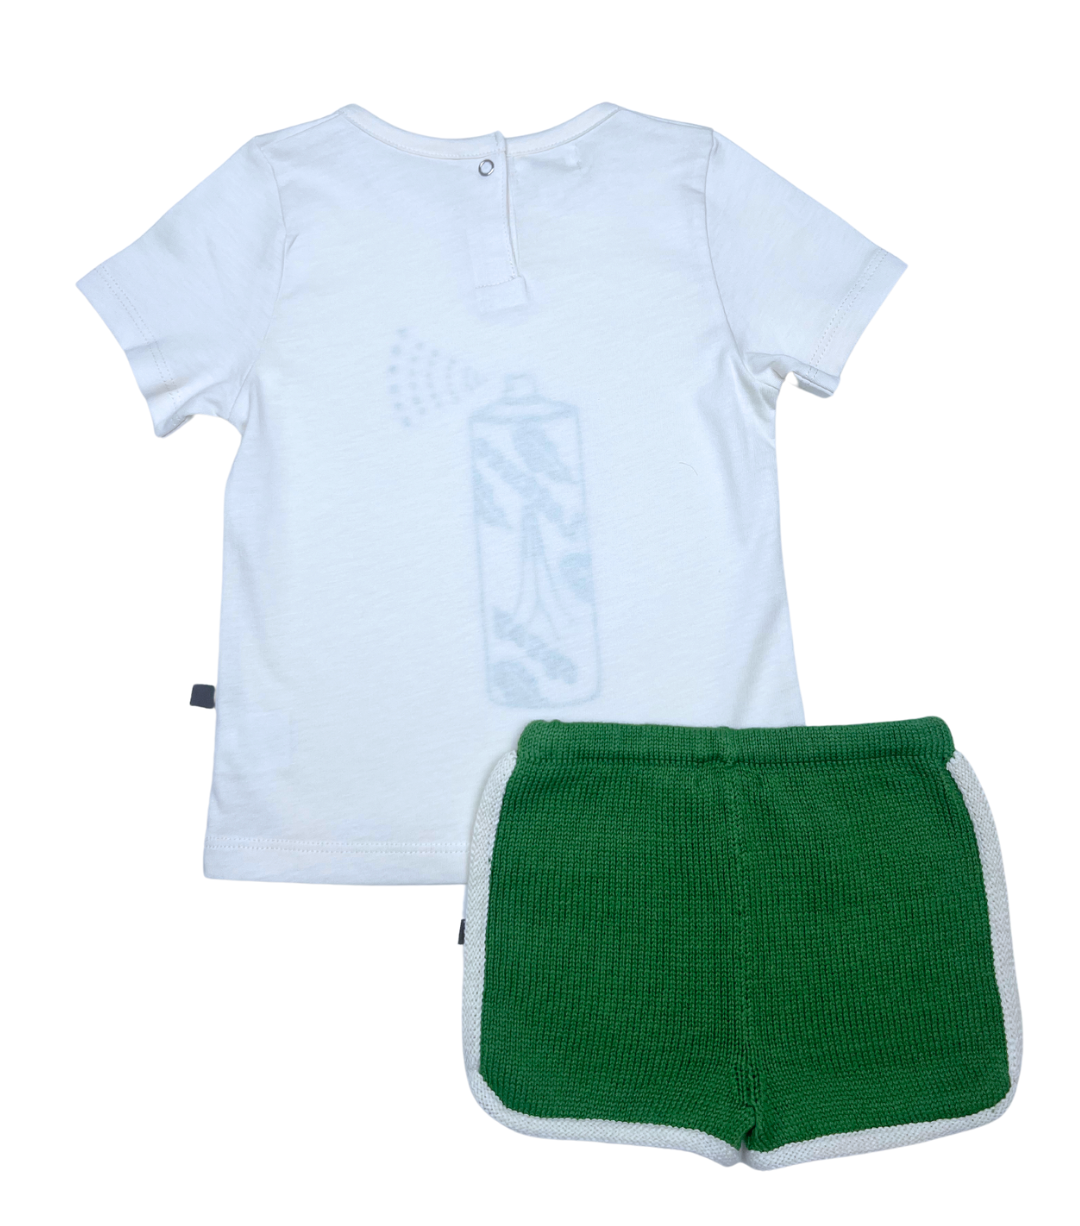 OEUF NYC - Ensemble T-shirt "lettuce spray" & short vert & blanc en maille - 12 mois